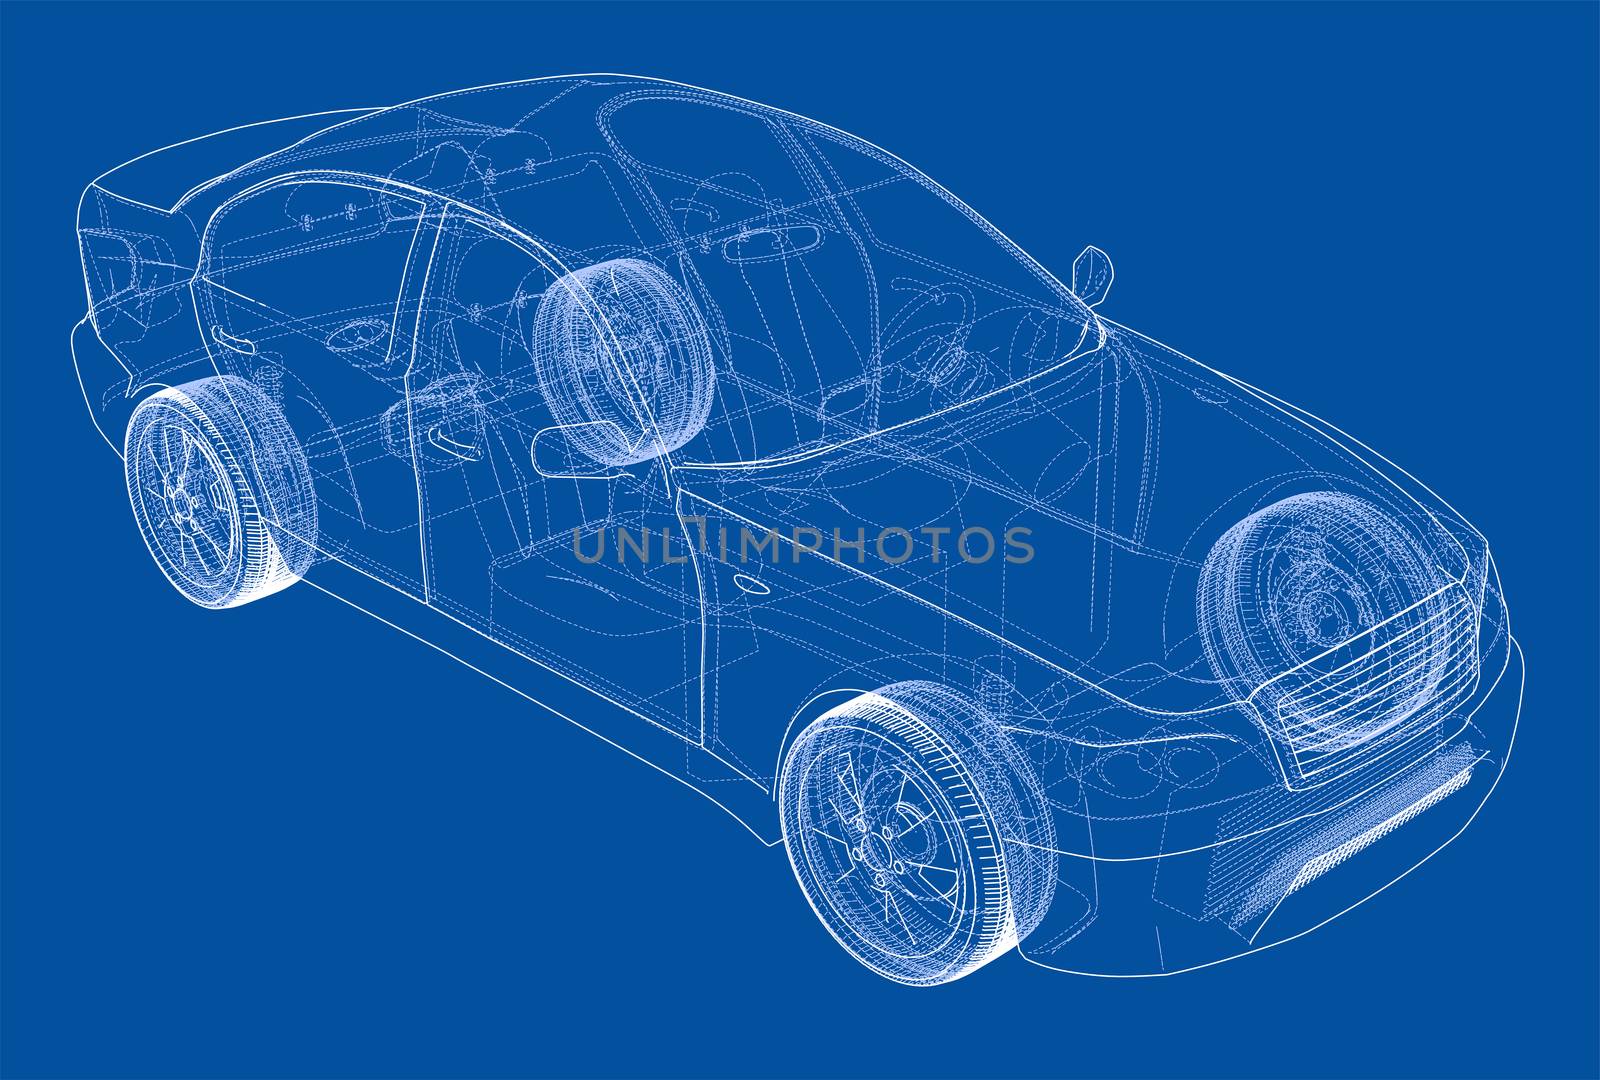 Concept car outline. 3d illustration. Wire-frame style